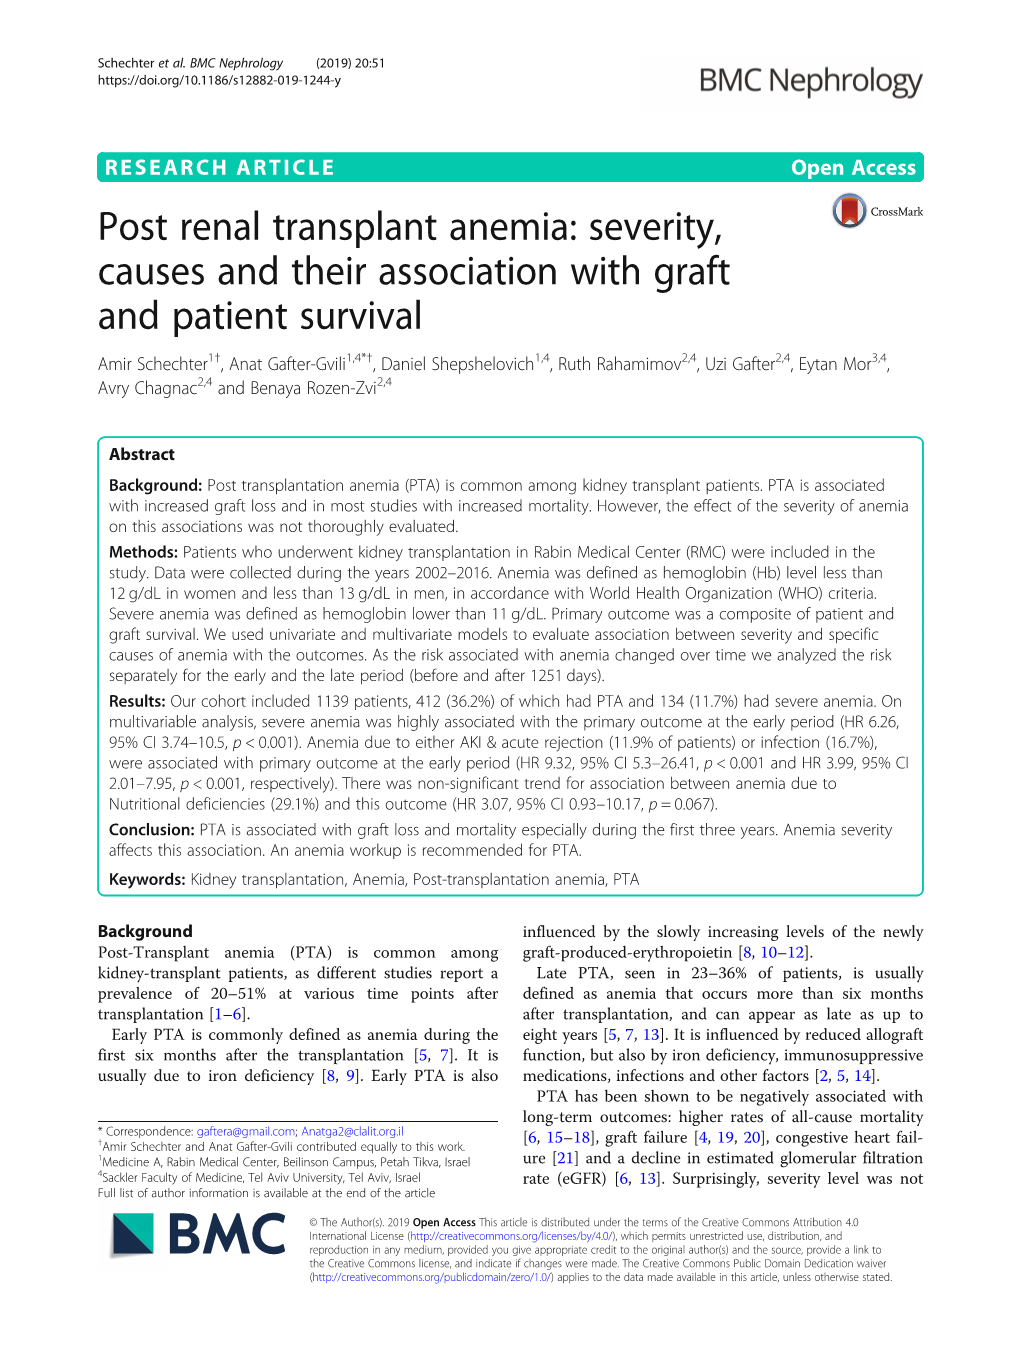 Post Renal Transplant Anemia